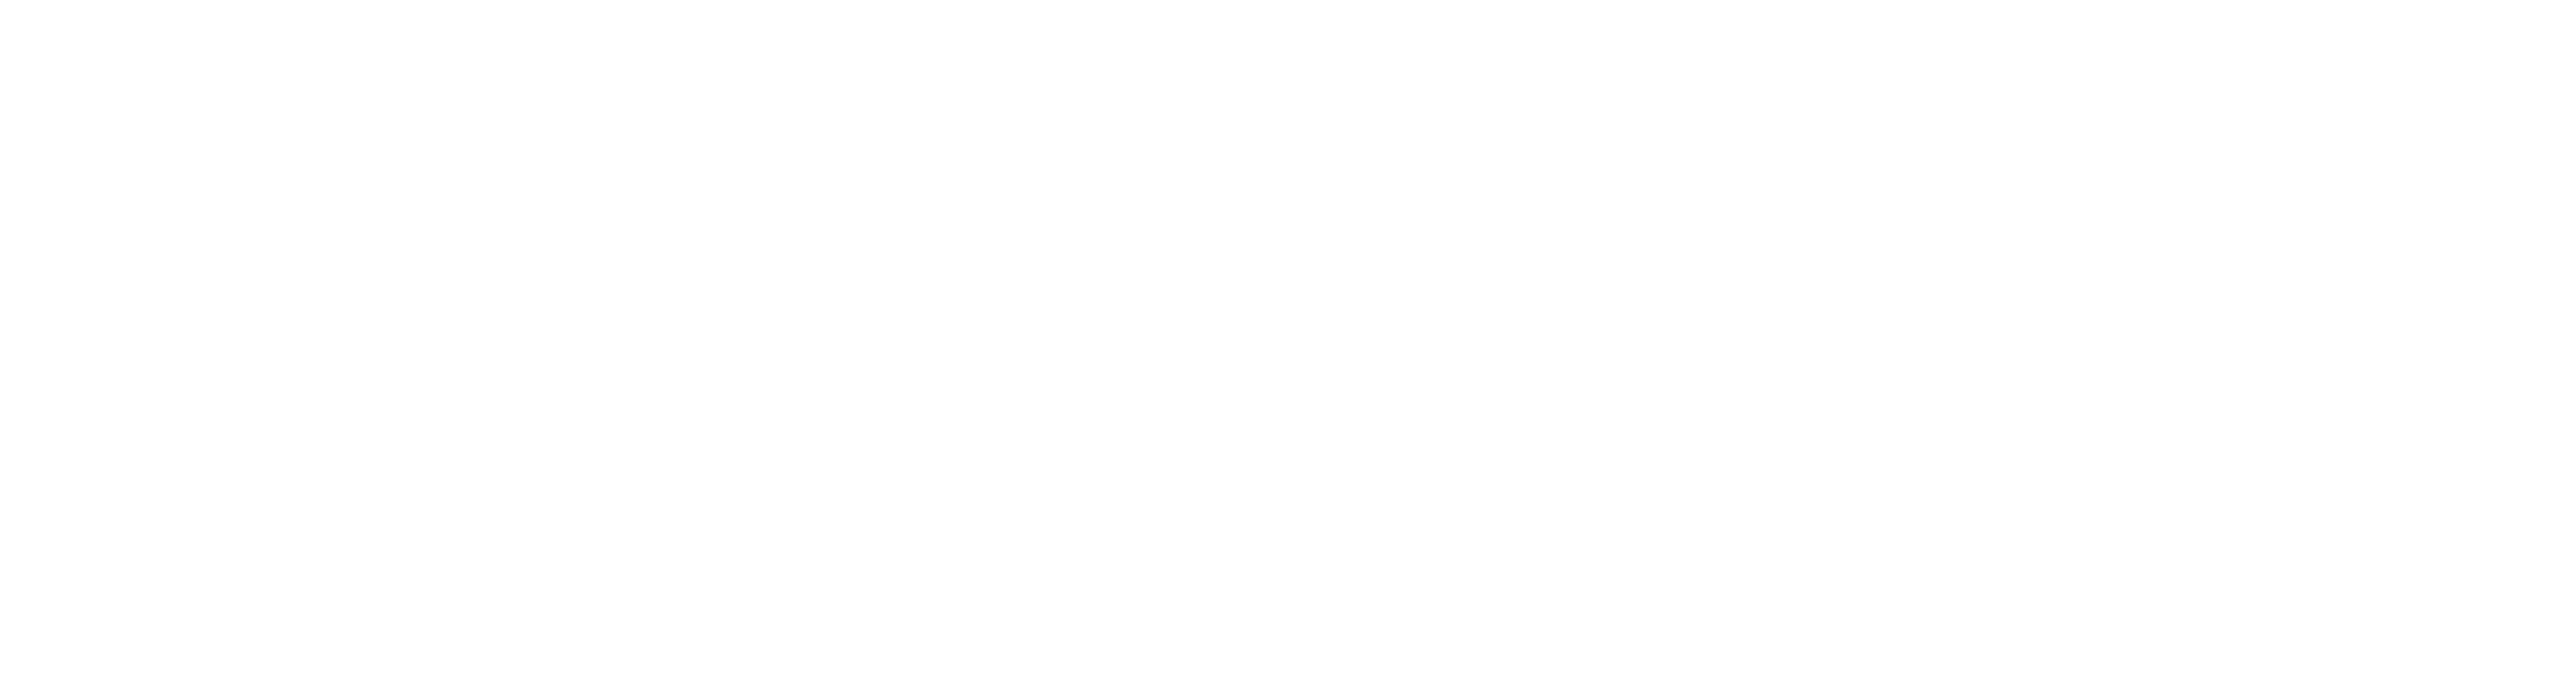 Sheffield Business Together